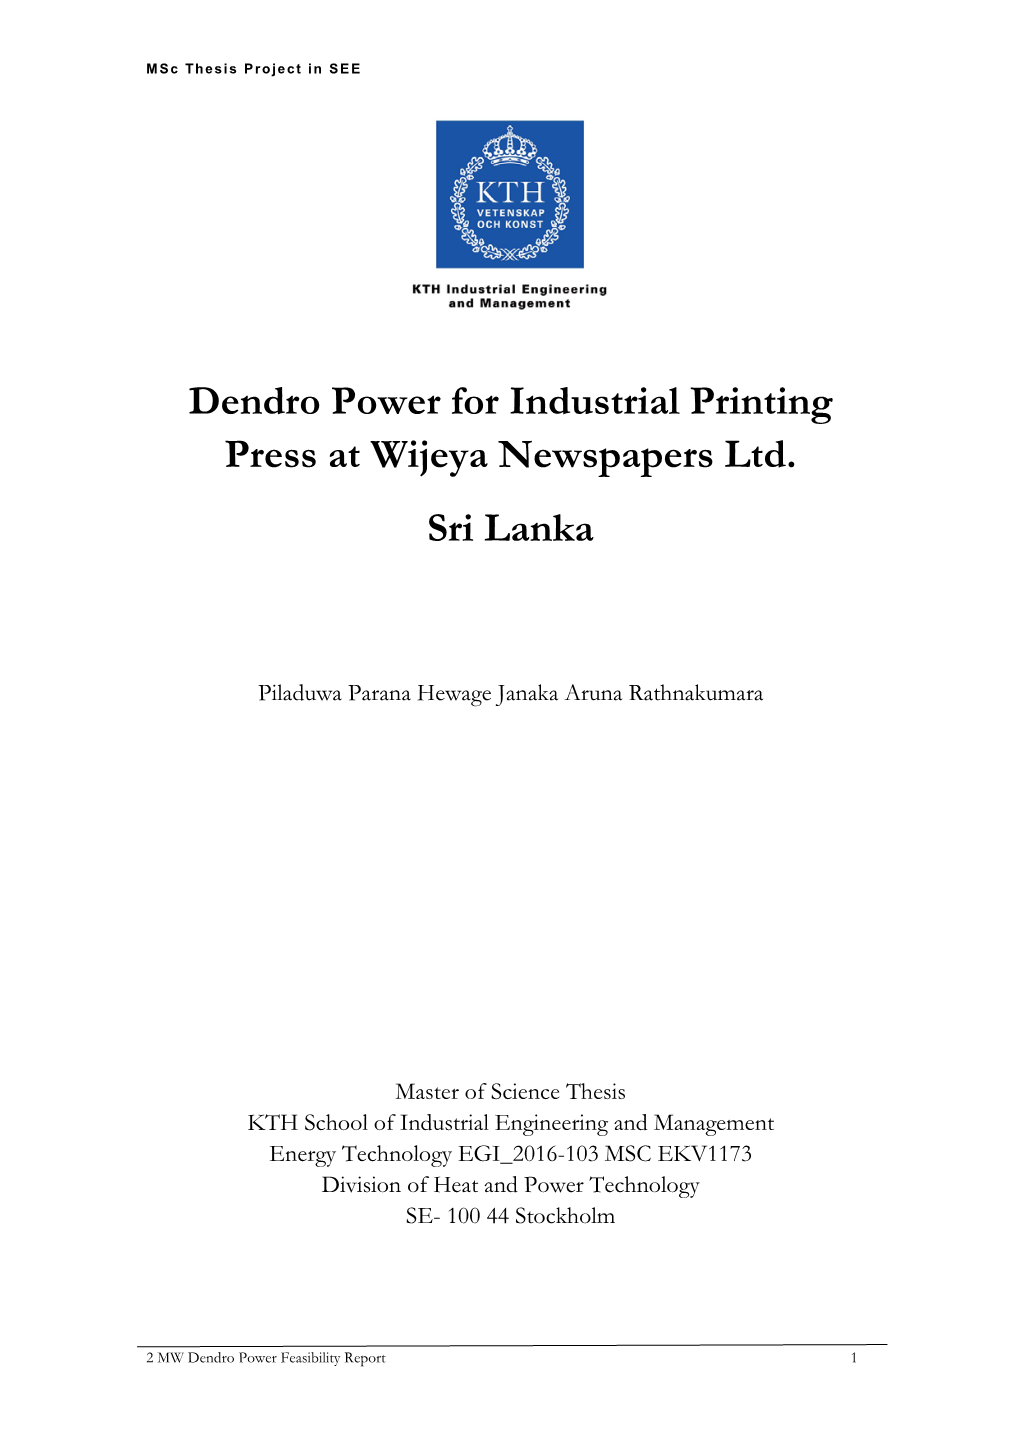 Dendro Power for Industrial Printing Press at Wijeya Newspapers Ltd